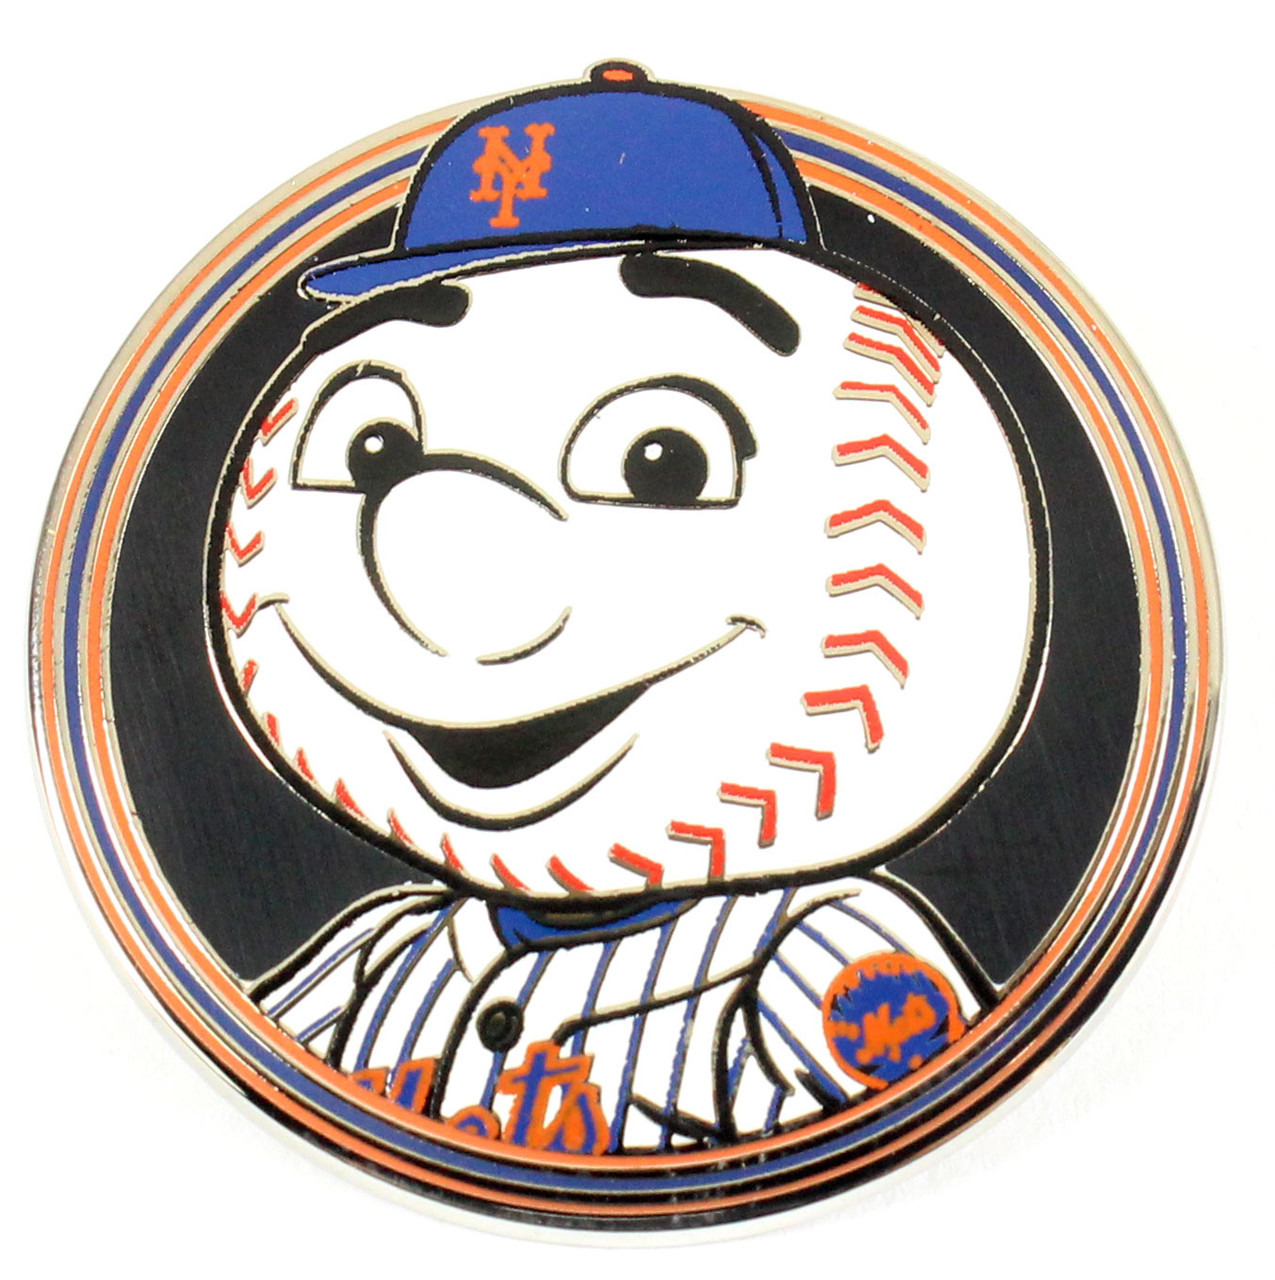 Mr. Met, the NY Mets Mascot - Mets History